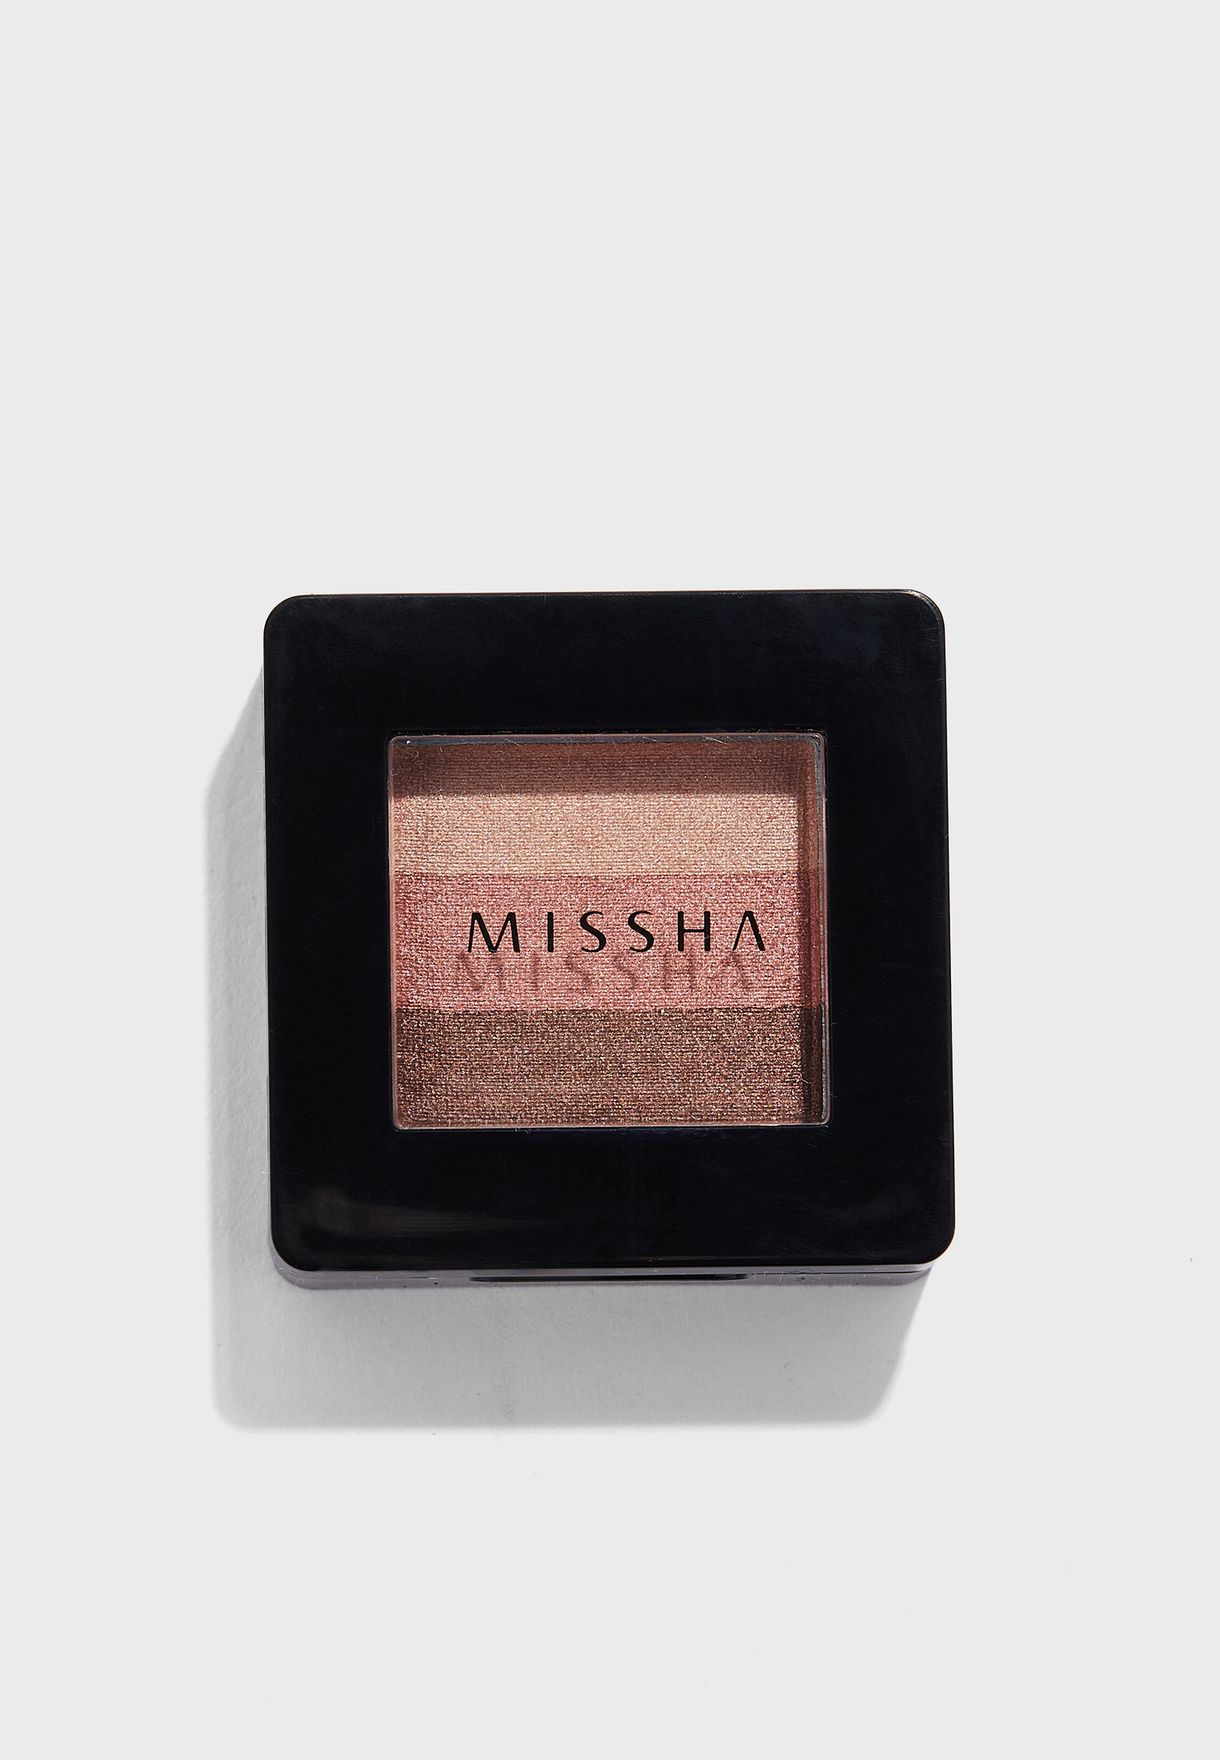 MISSHA Triple Shadow (No.10/Oriental Pink)